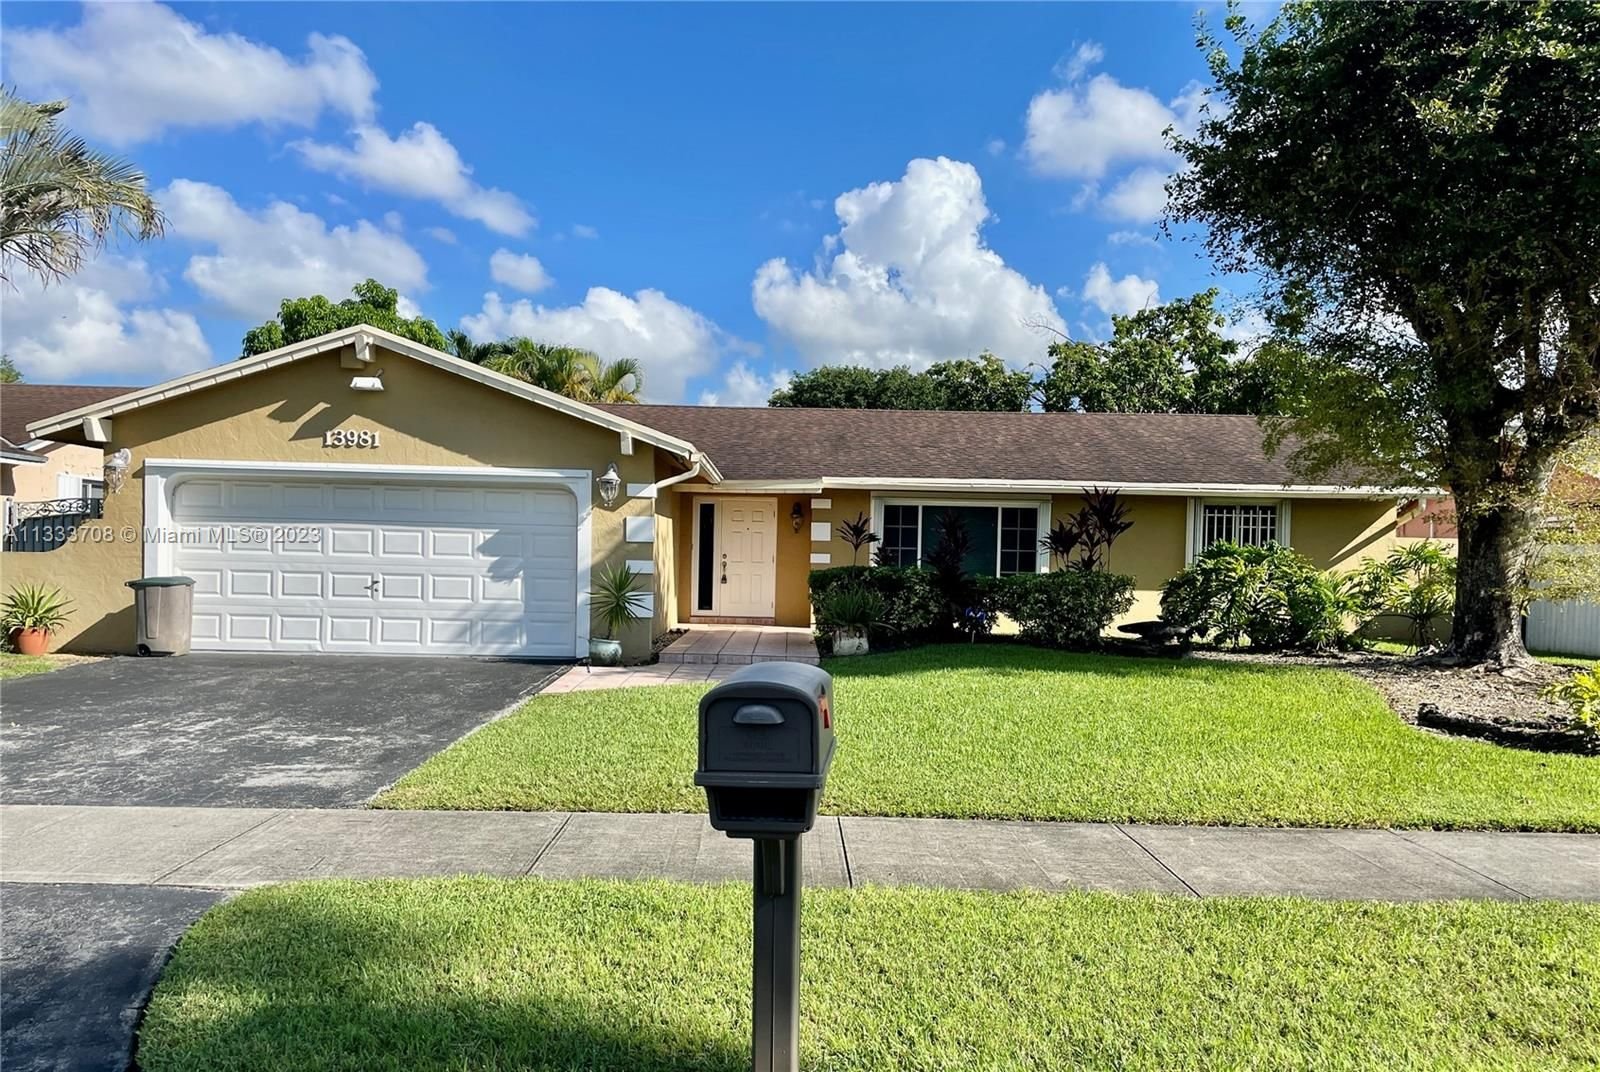 Real estate property located at 13981 109th St, Miami-Dade County, Miami, FL